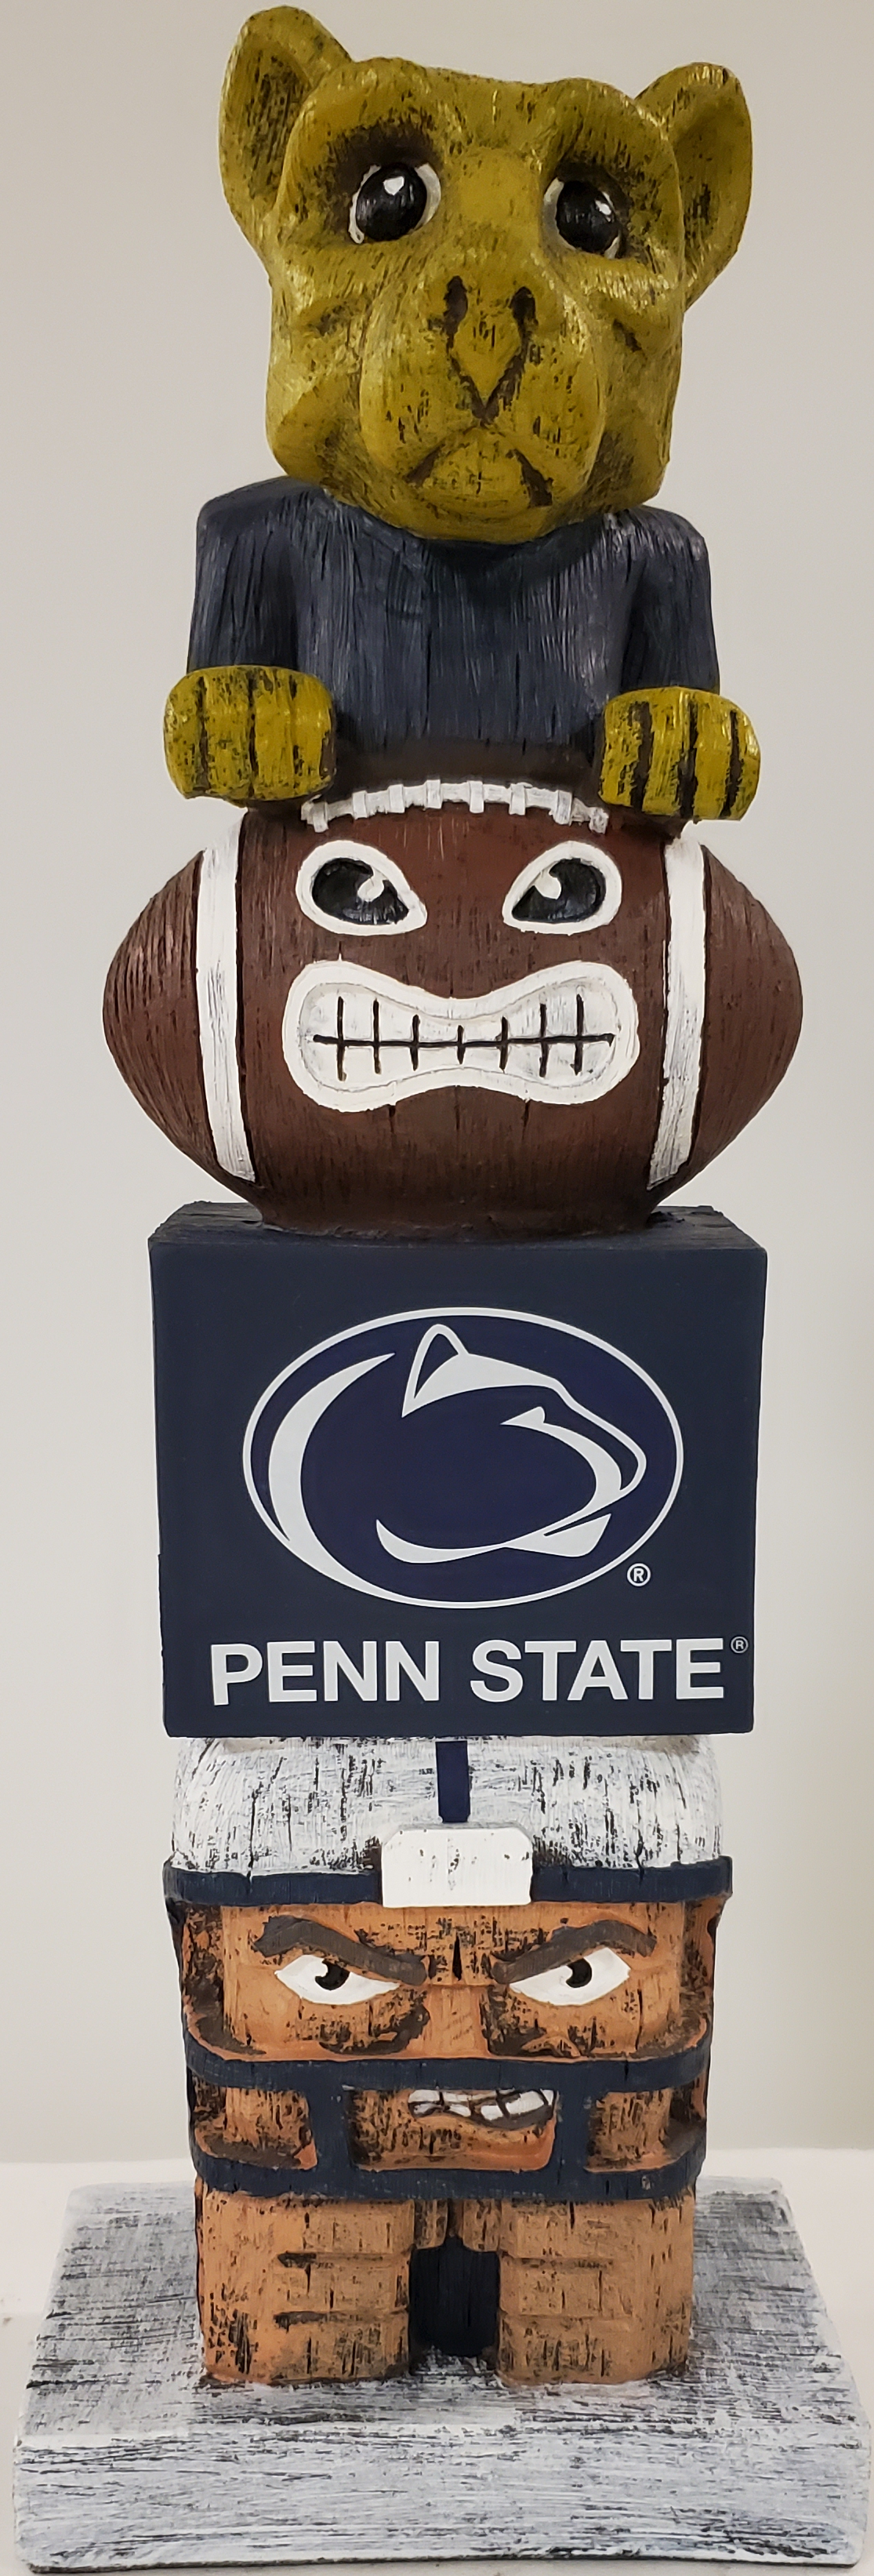 Penn State Totem